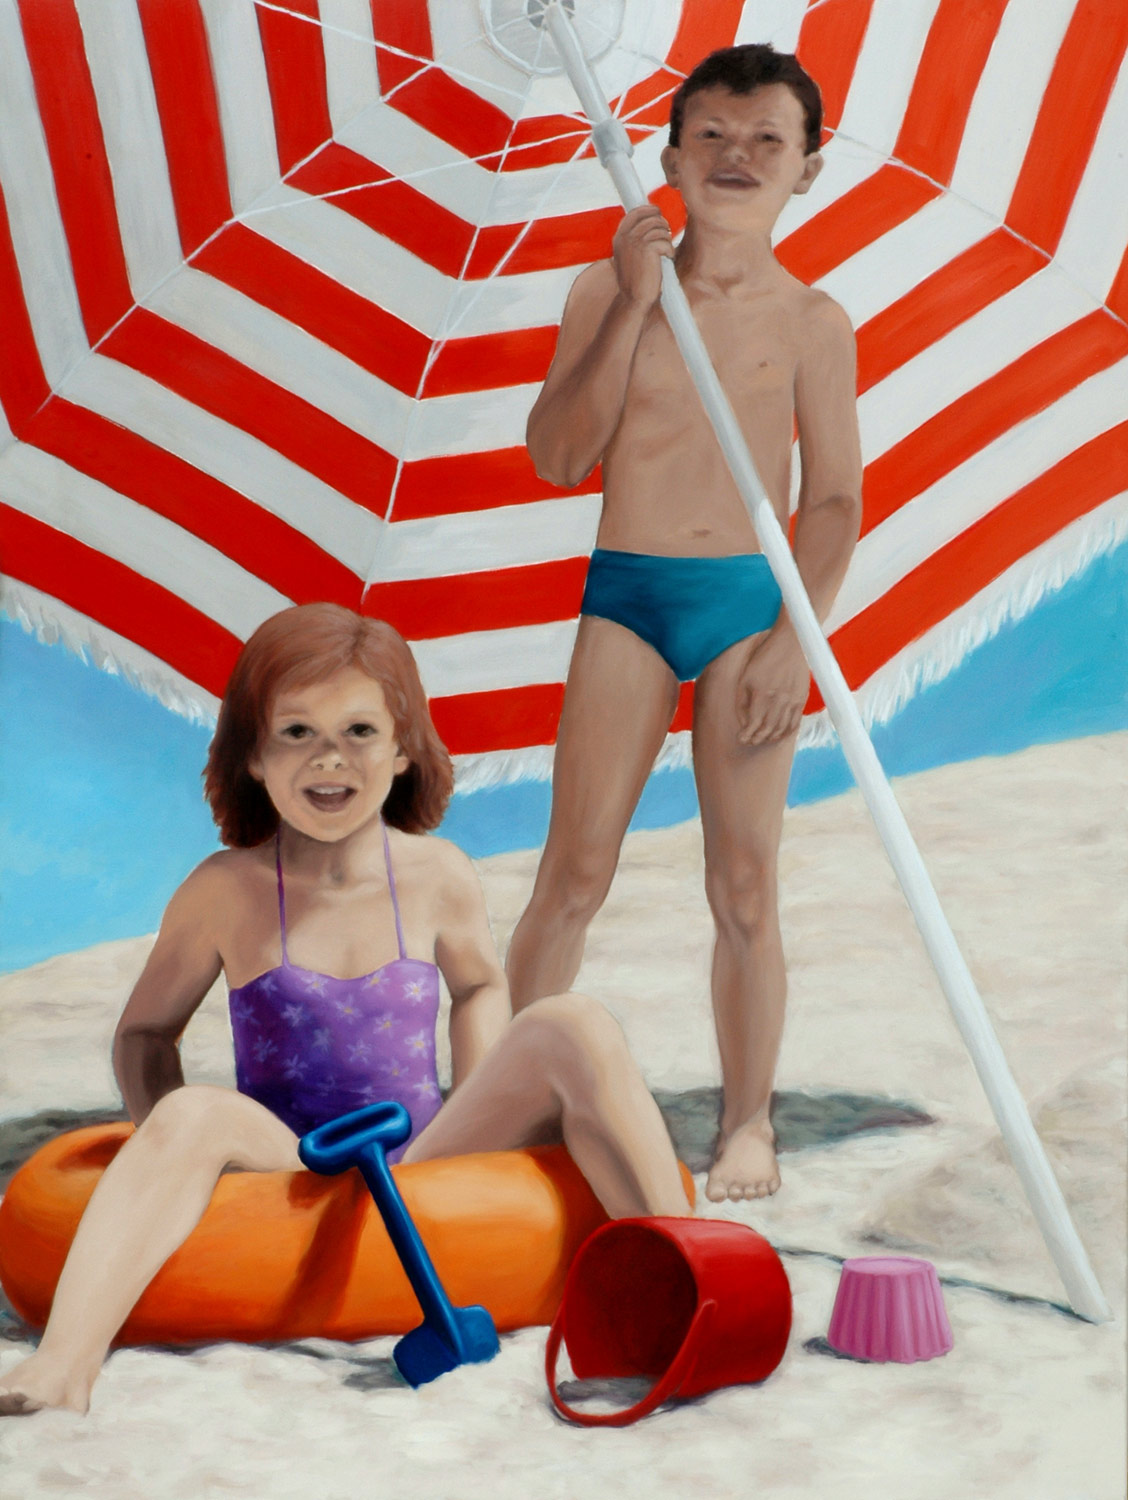 Martina Büttner painting beach umbrella, 2008